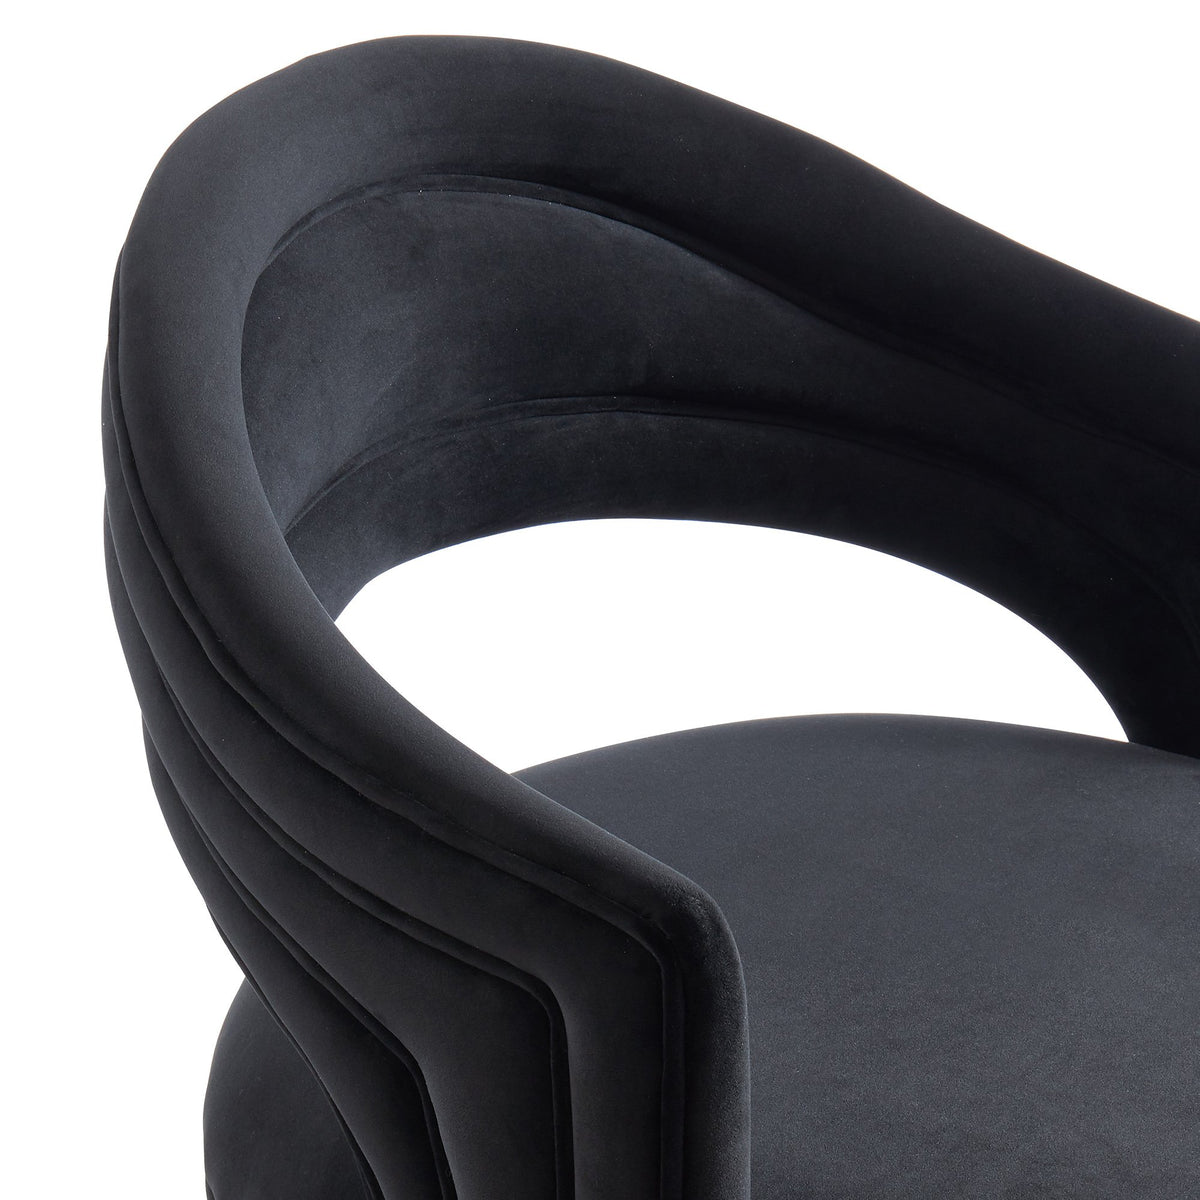 Colane Black Velvet and Gold Swivel Accent Chair